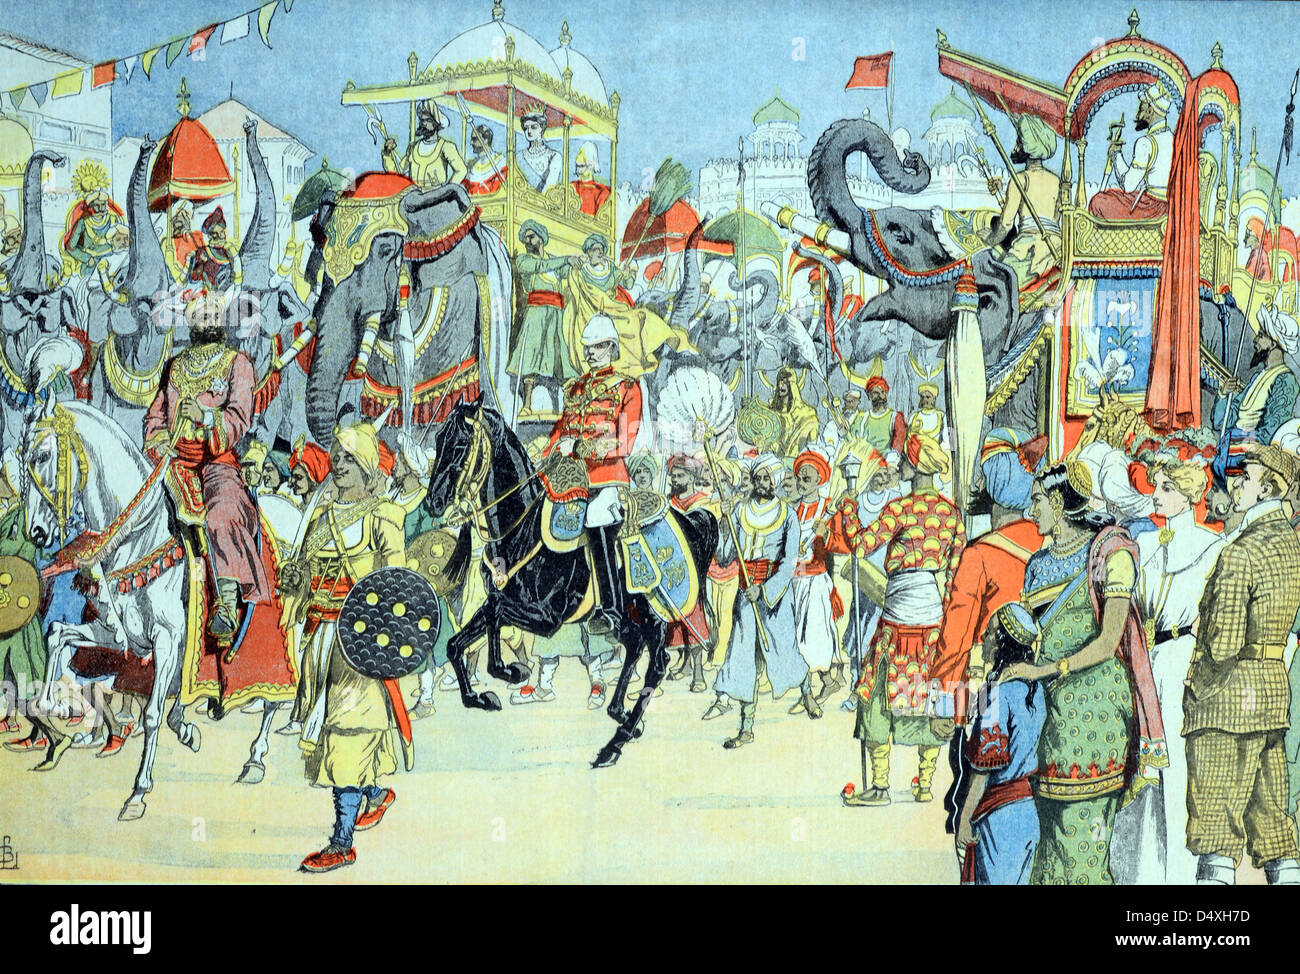 Delhi Durbar Ceremony, Imperial Durbar or Ceremonial Gathering During British Rule in India (Jan 1903) Vintage Engraving or Illustration Stock Photo